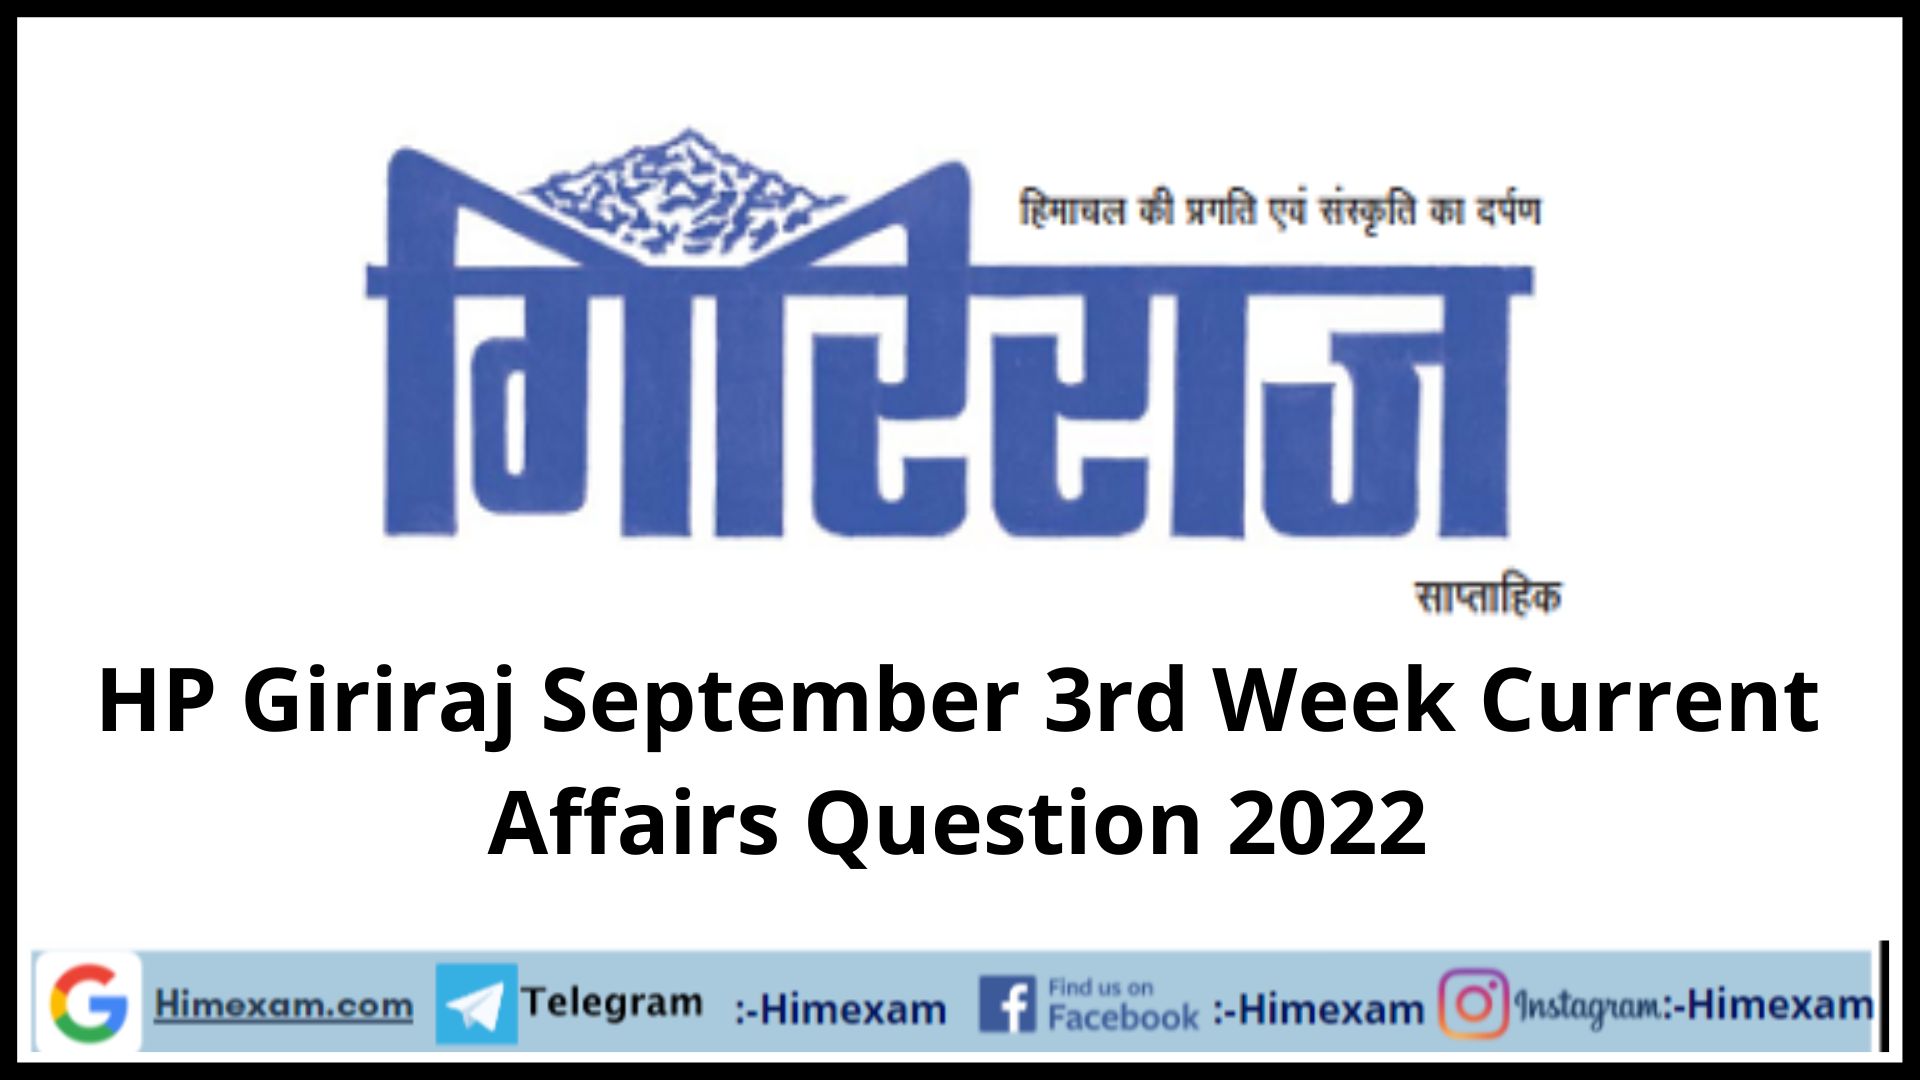 HP Giriraj September 3rd Week Current Affairs Question 2022